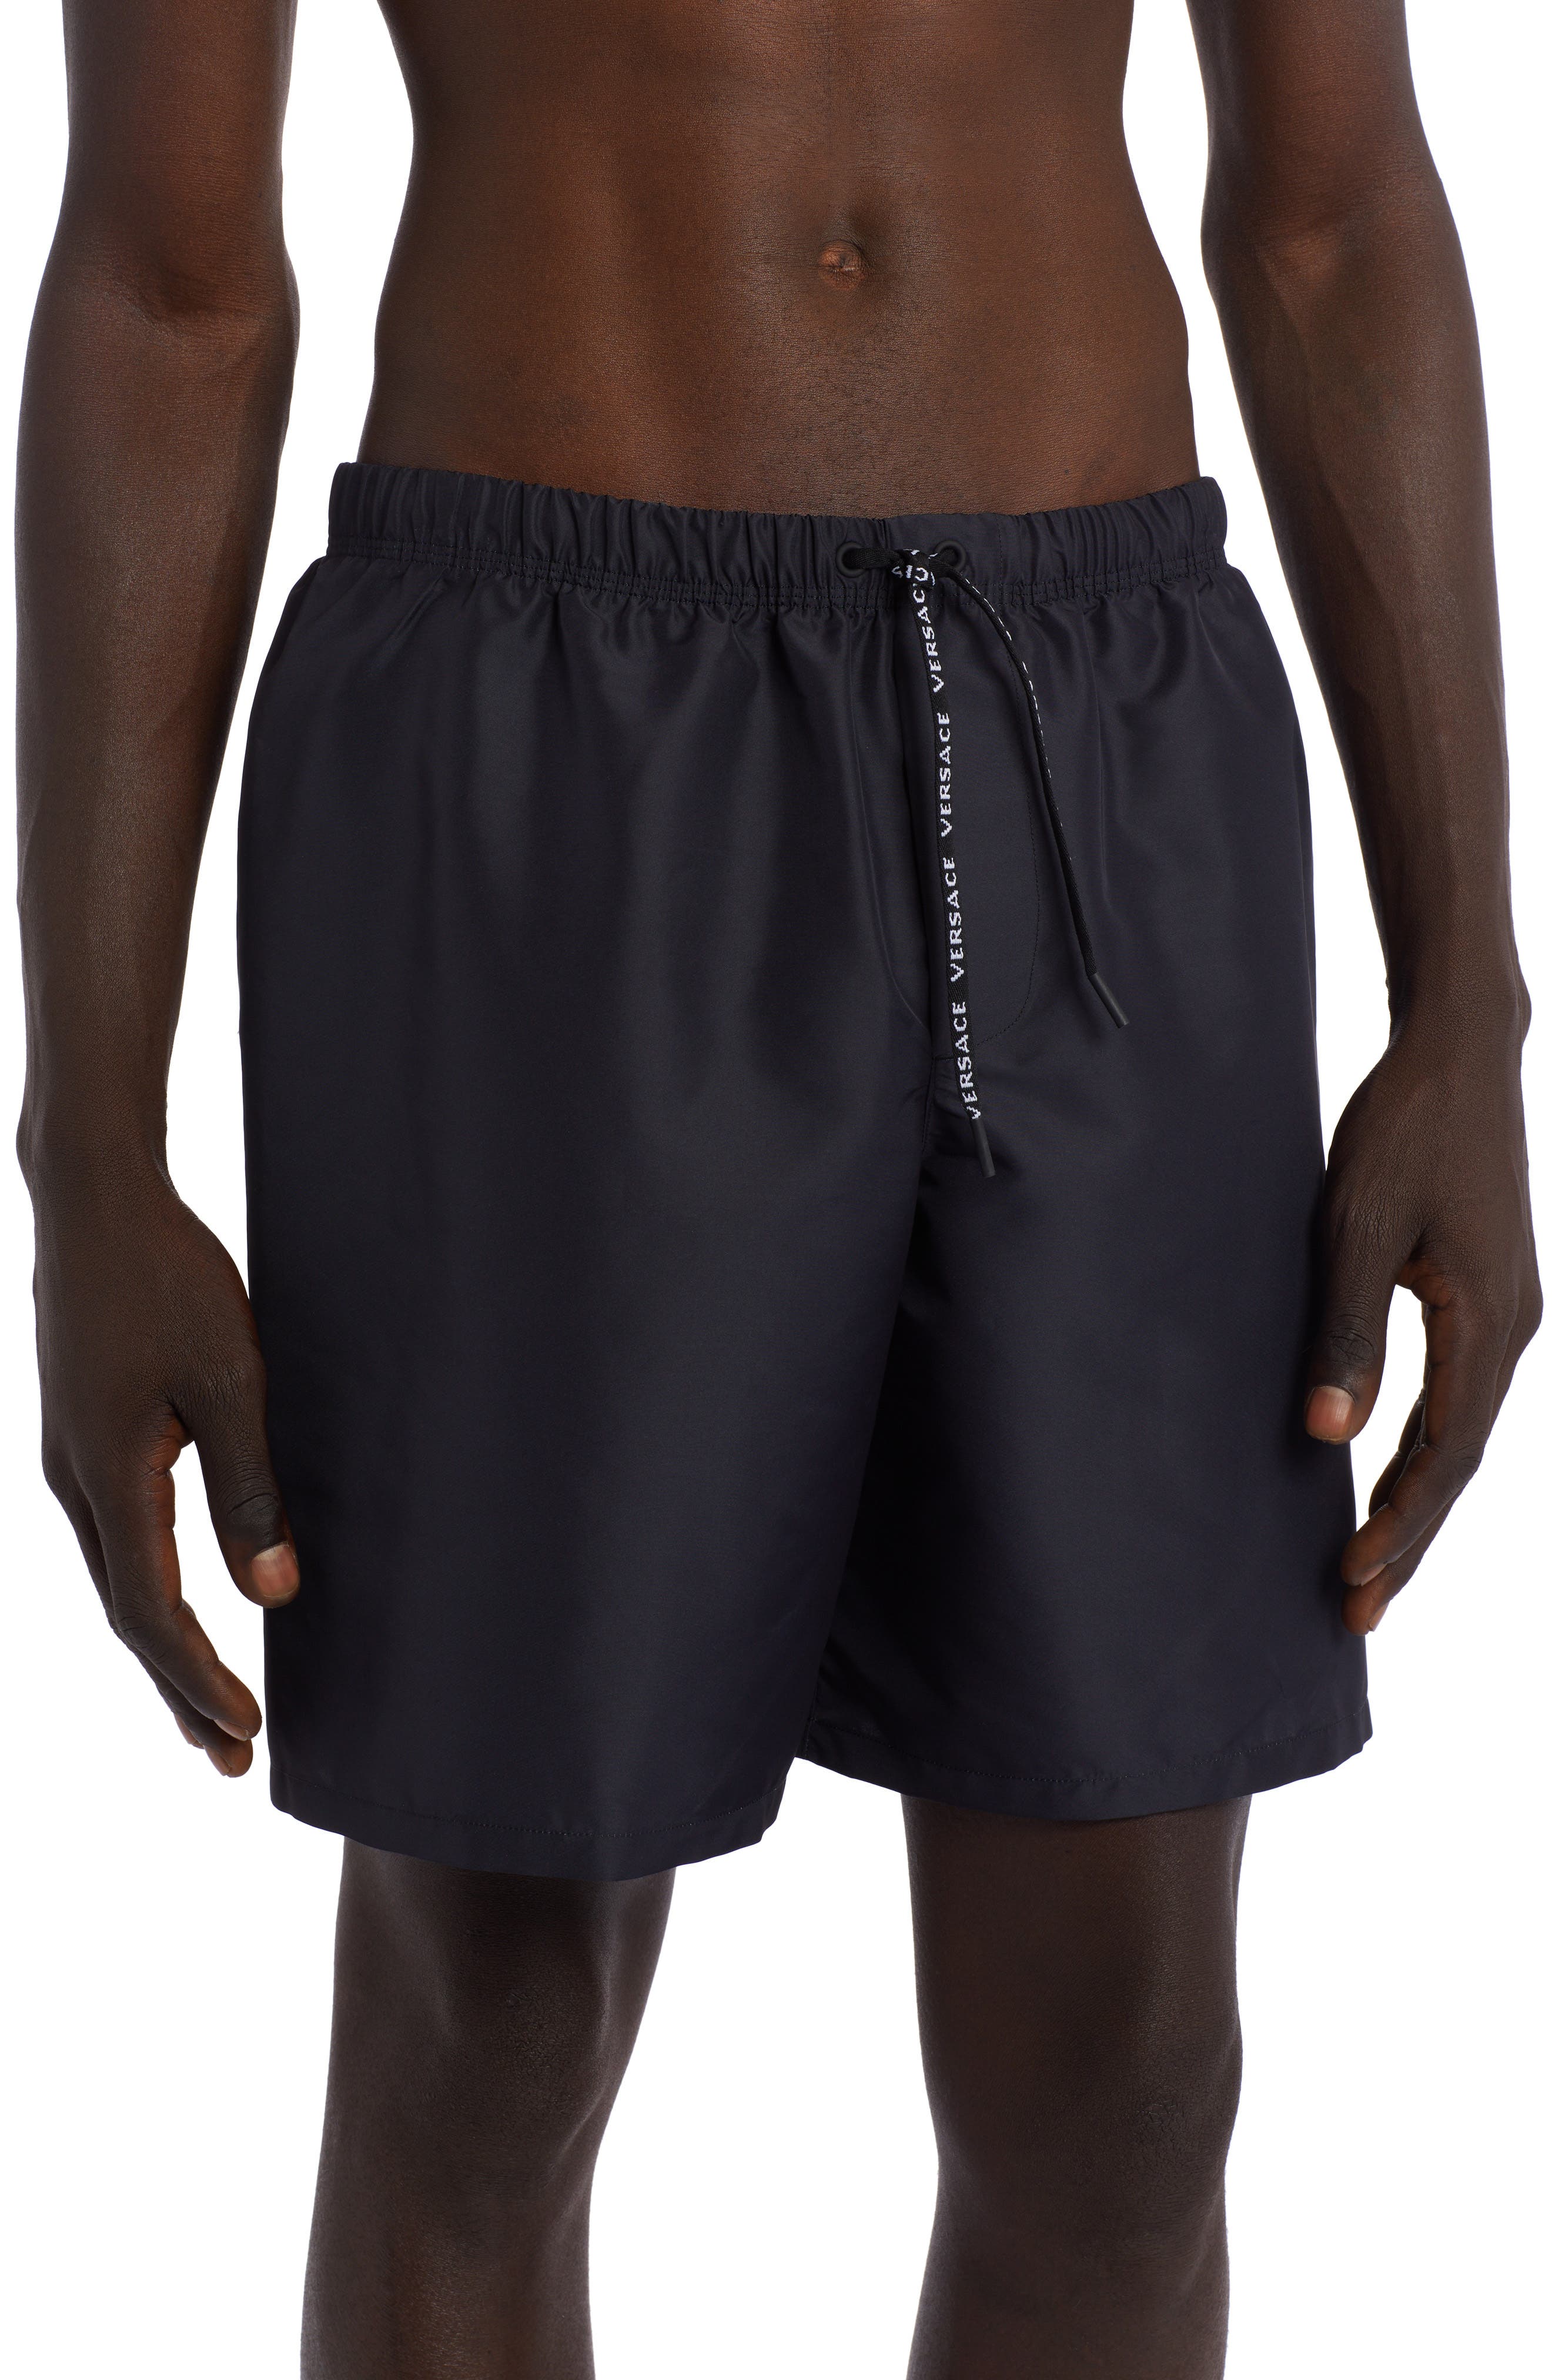 New Reebok men's black swim briefs size Large